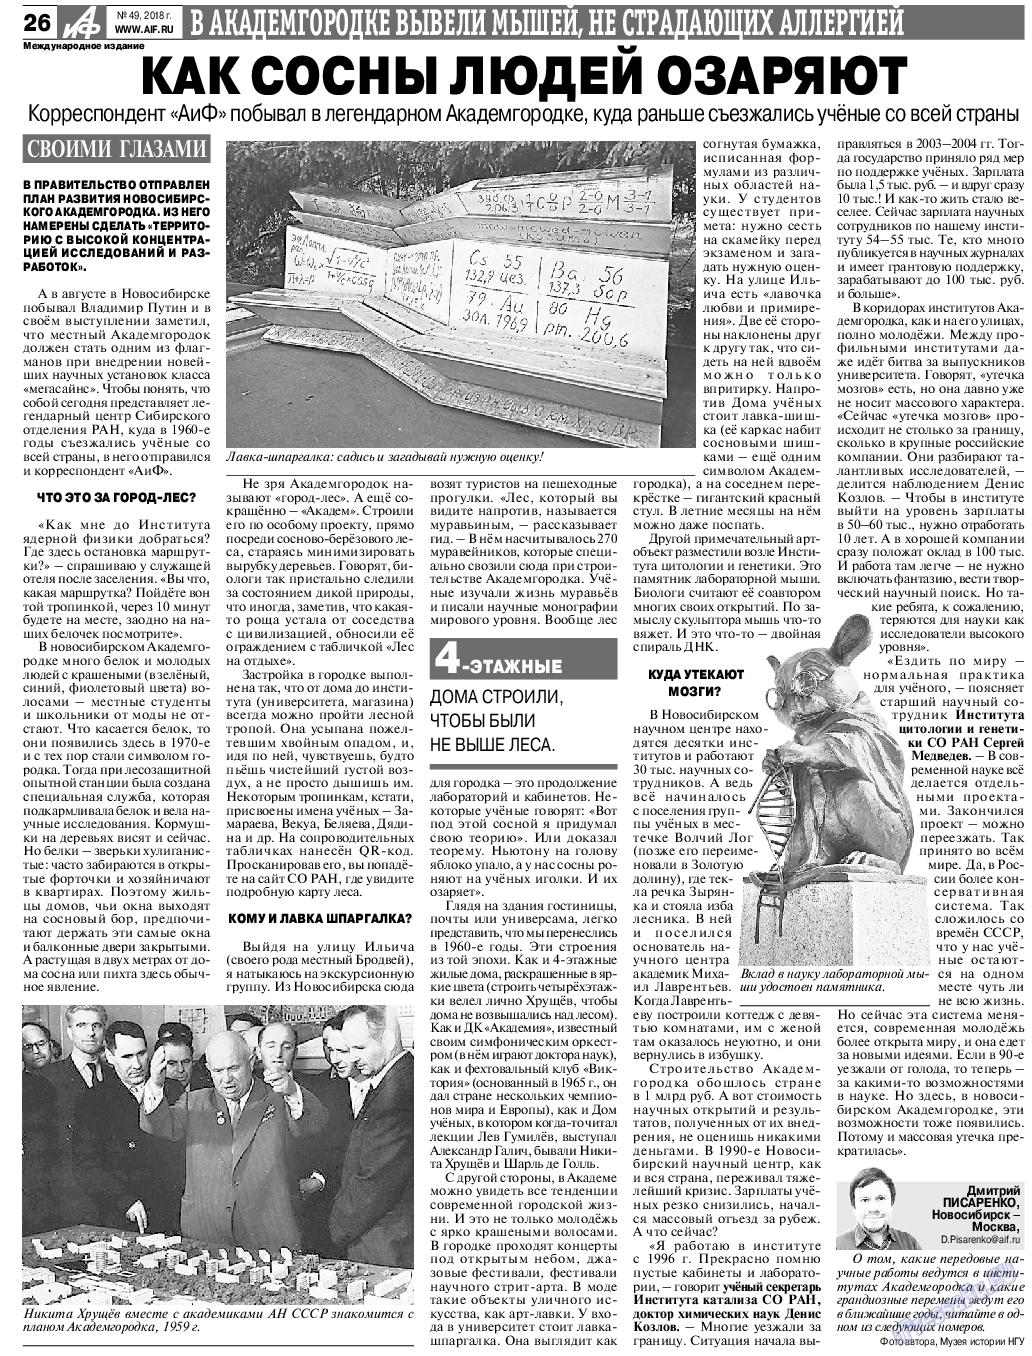 Аргументы и факты Европа, газета. 2018 №49 стр.26